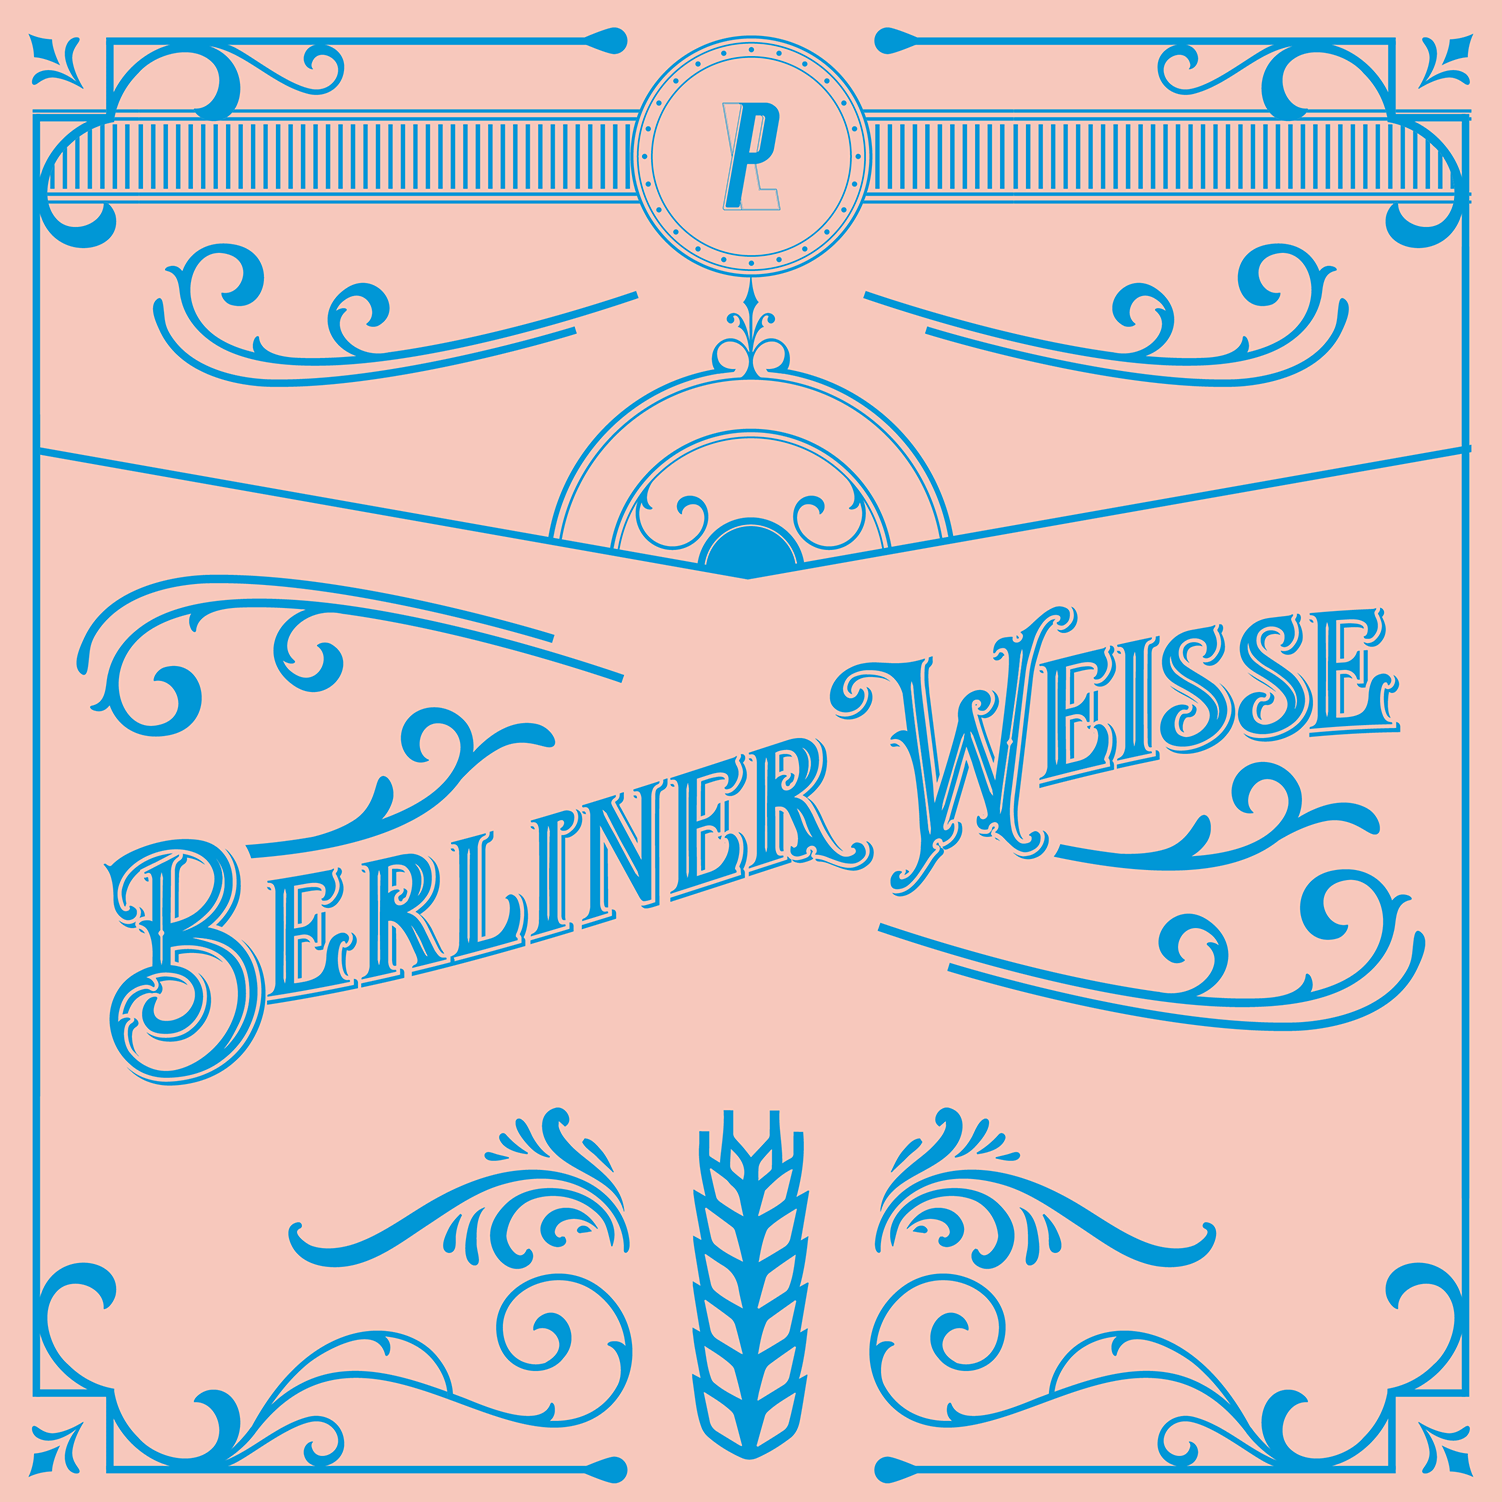 Berlinerweisse_Webtile_Square